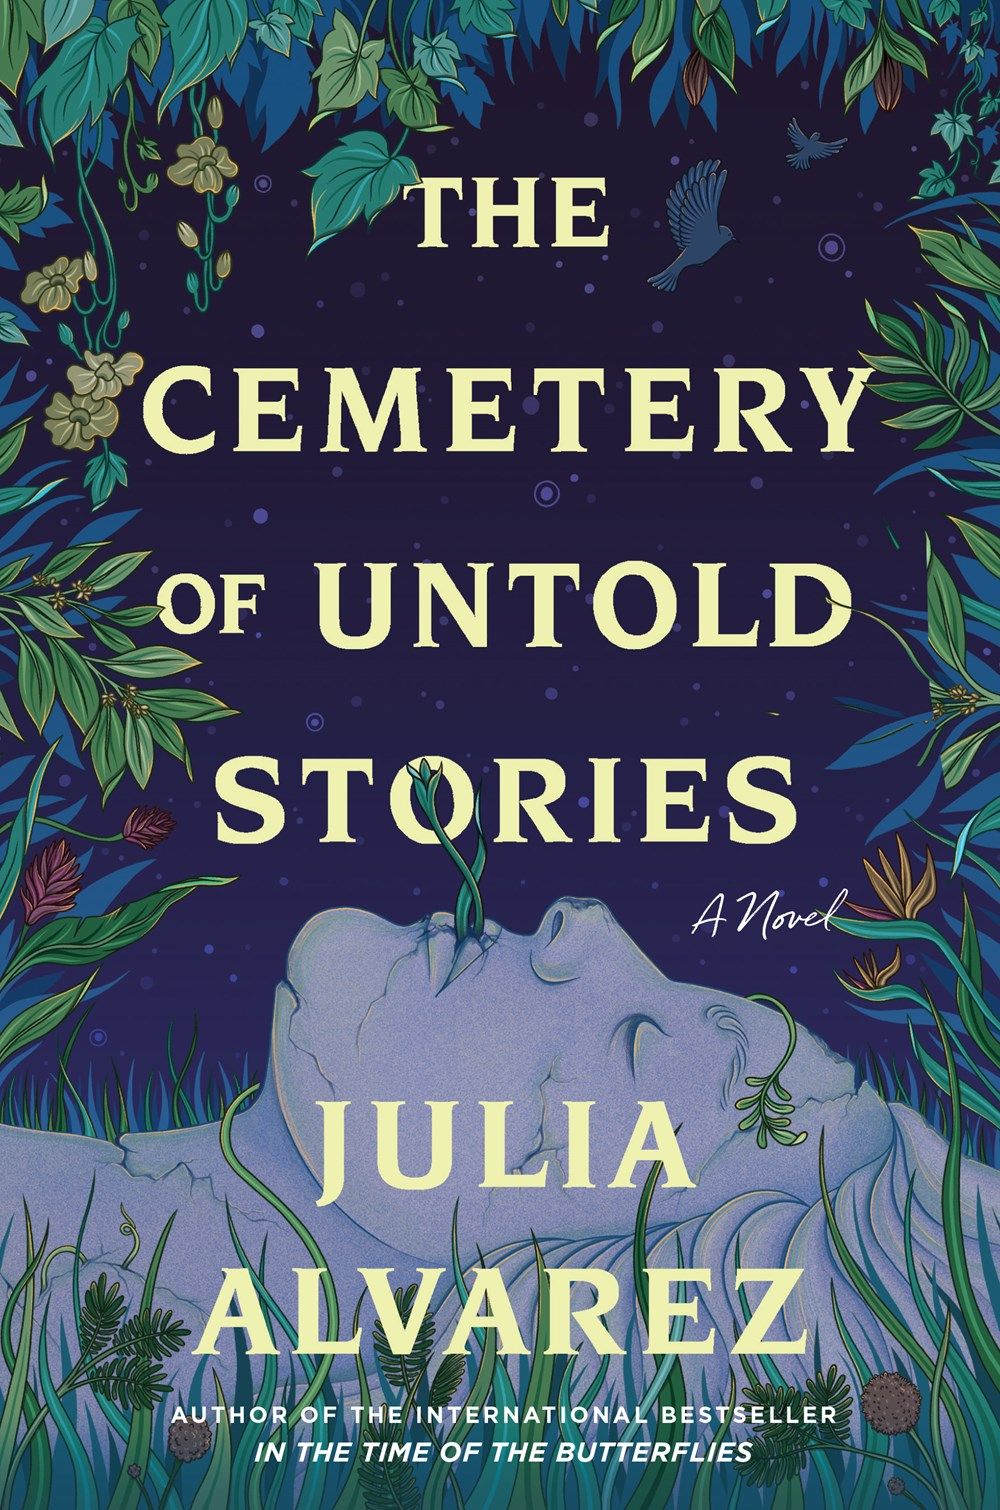 The Cemetery of Untold Stories by Julia Alvarez book cover